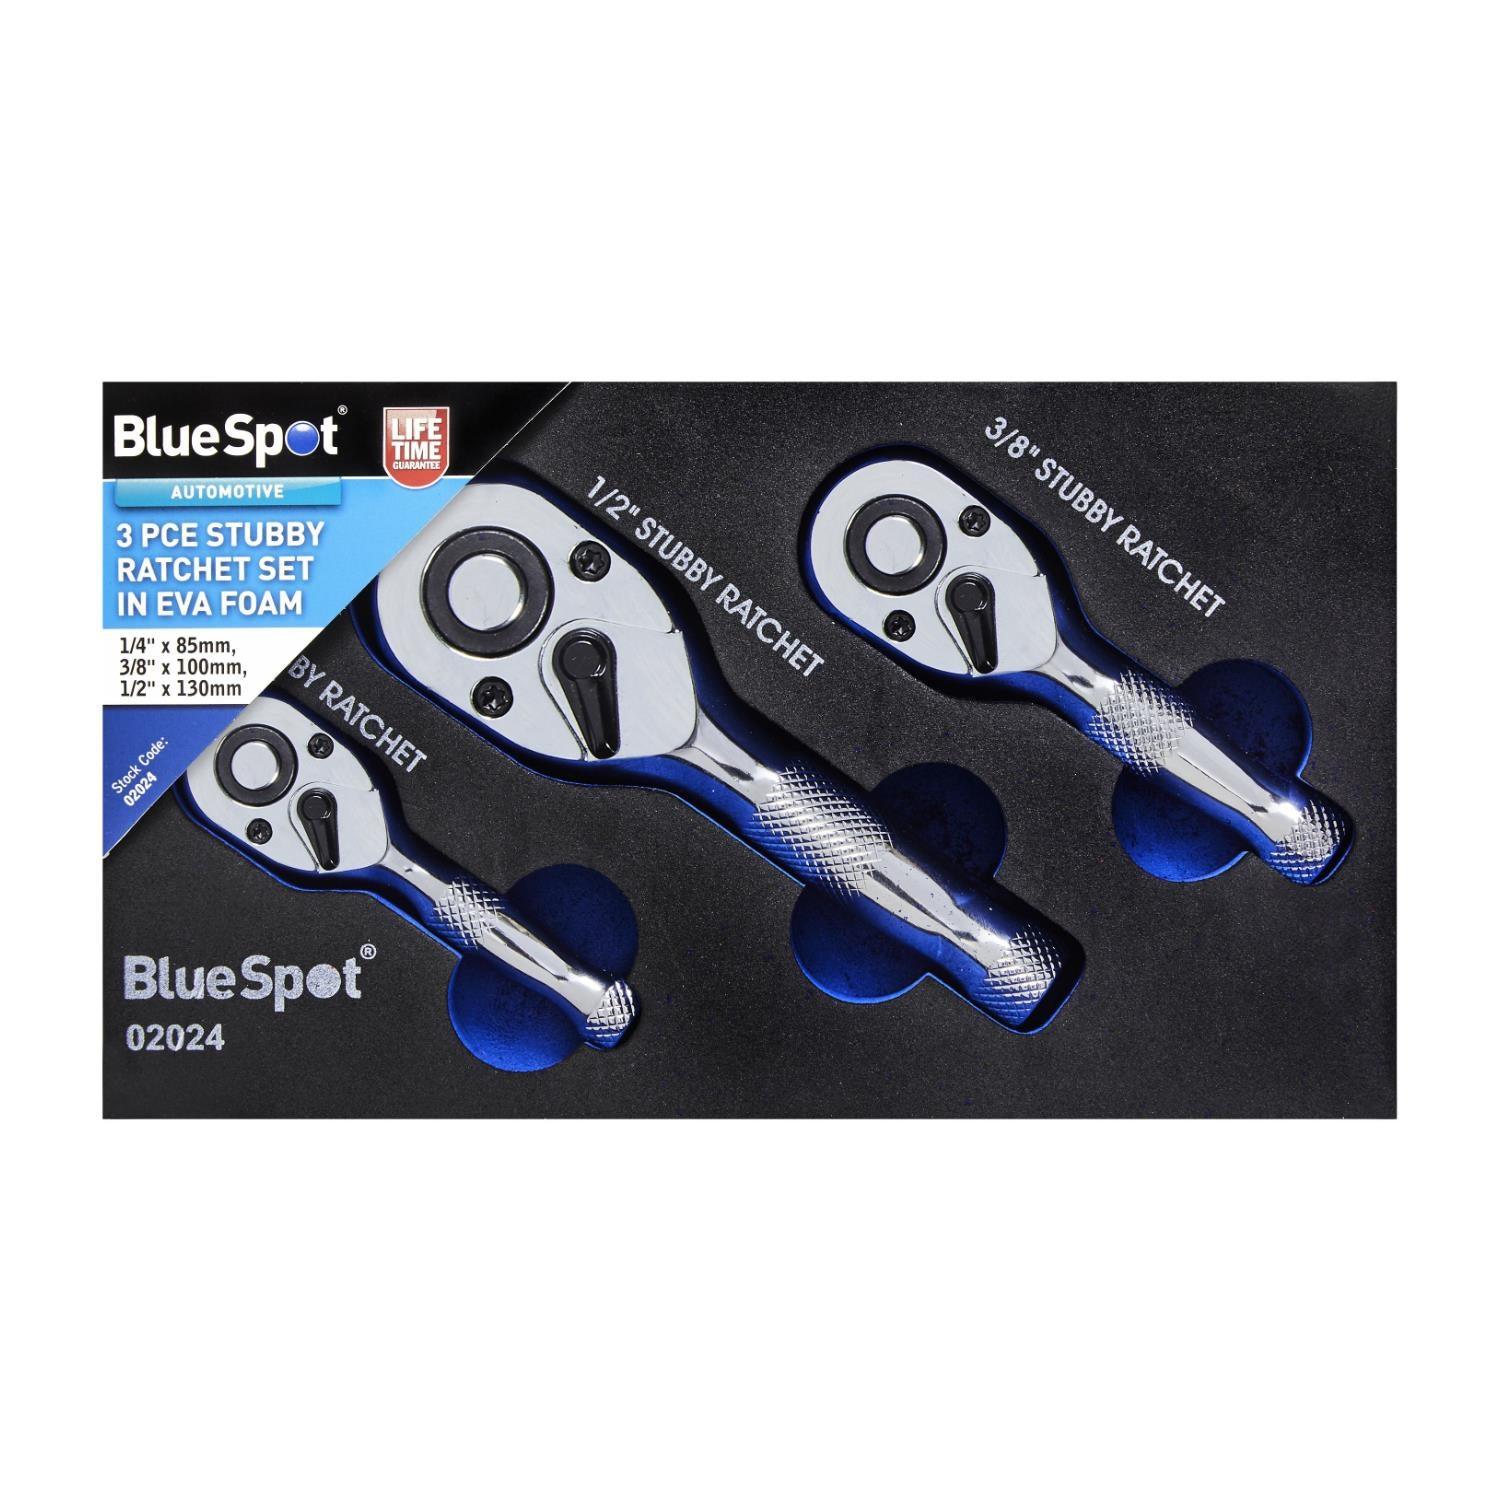 Bluespot Tools 3 Piece Stubby Ratchet Set In EVA Foam Tray 1/4", 3/8", 1/2" 02024 - Tools 2U Direct SW